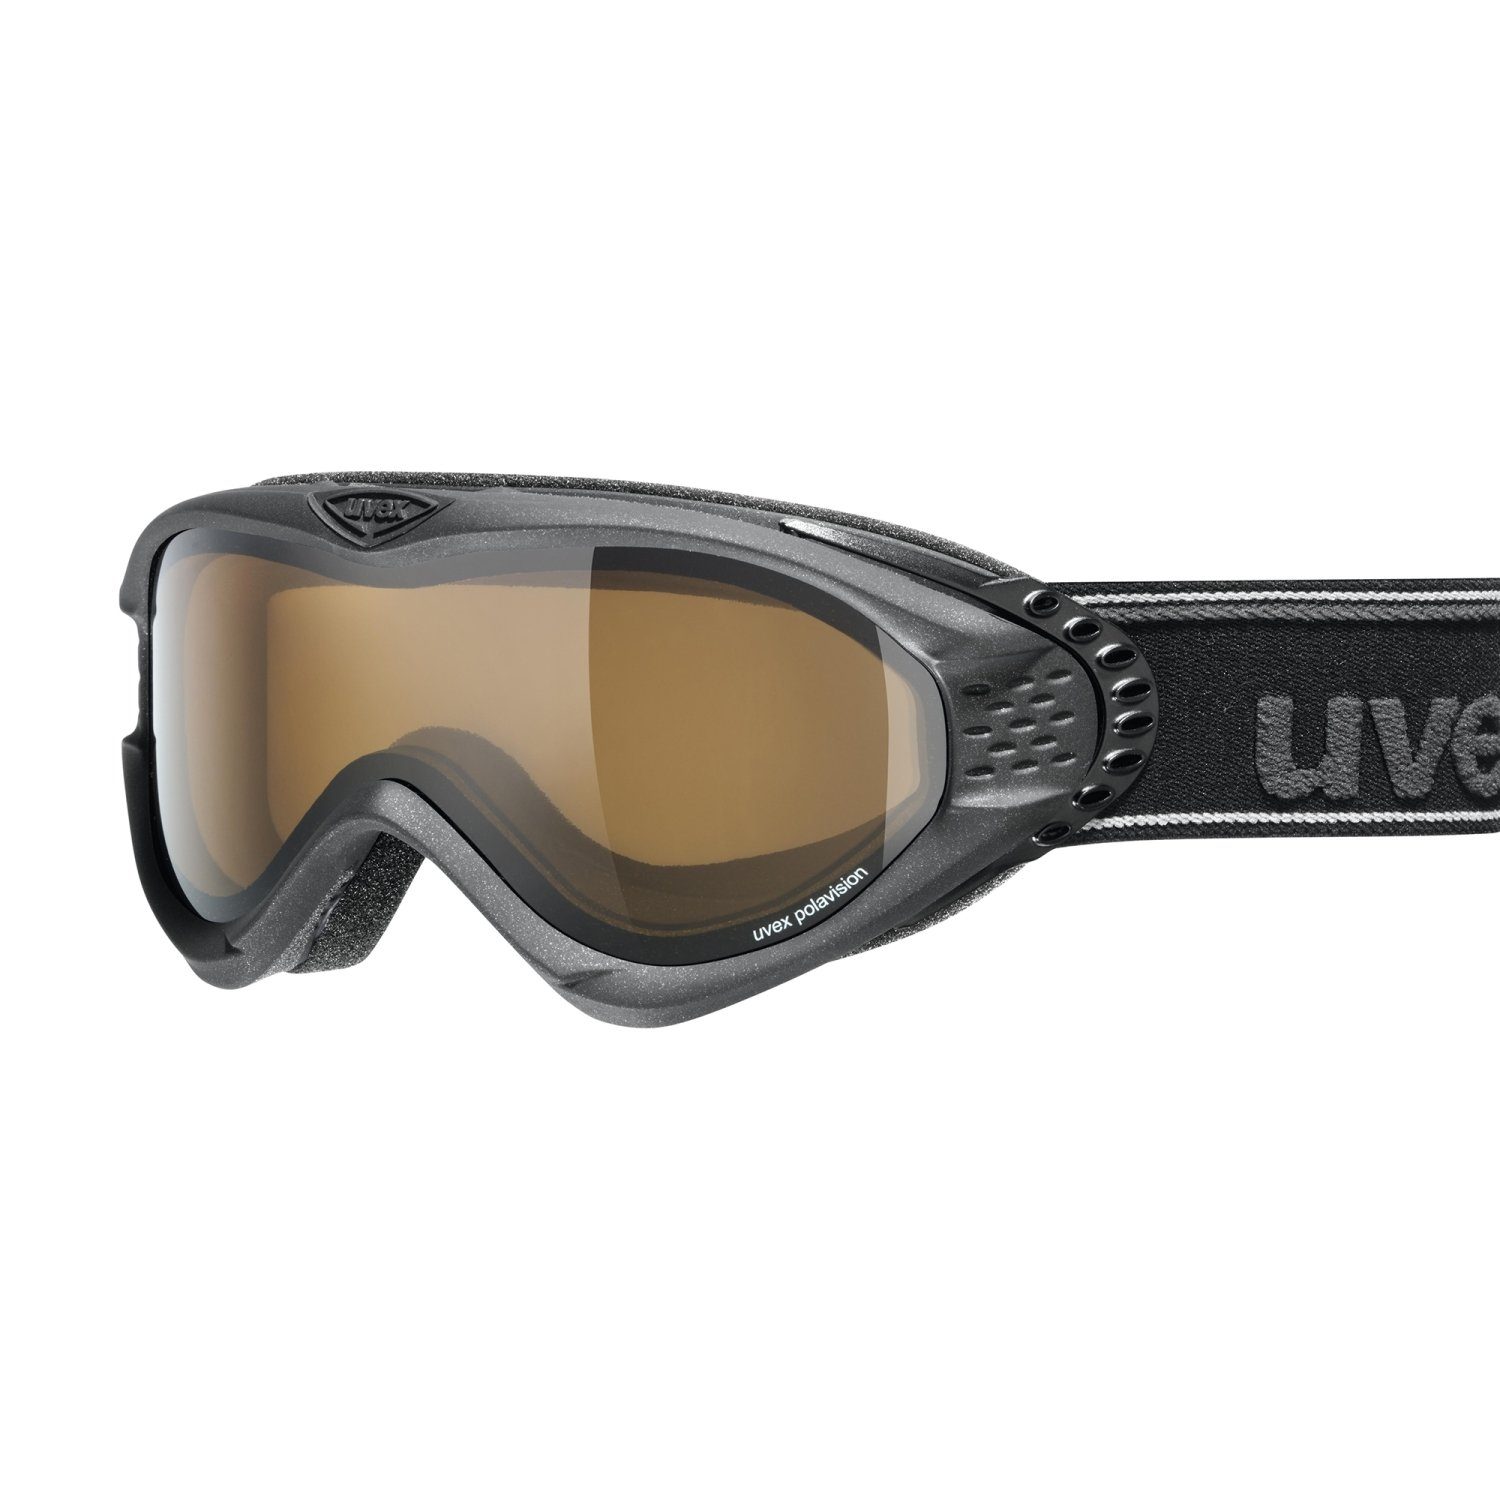 Pola Uvex Ski-/Snowboardbrille Onyx schwarz Snowboardbrille